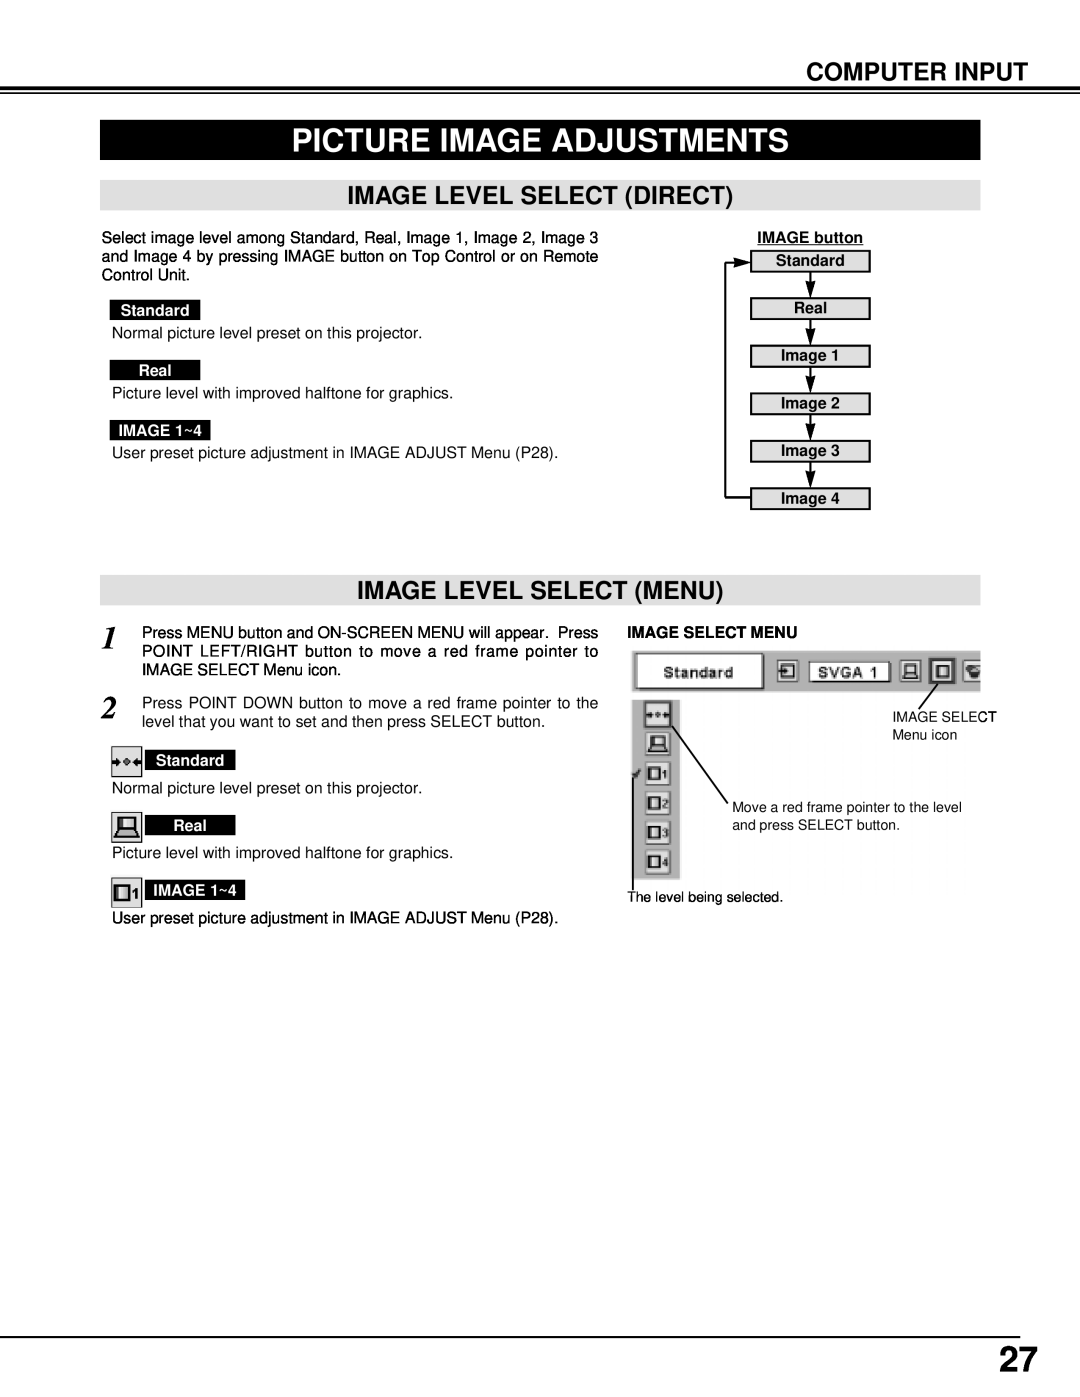 Eiki LC-XNB3W owner manual Picture Image Adjustments, Image Level Select Direct, Image Level Select Menu, Computer Input 